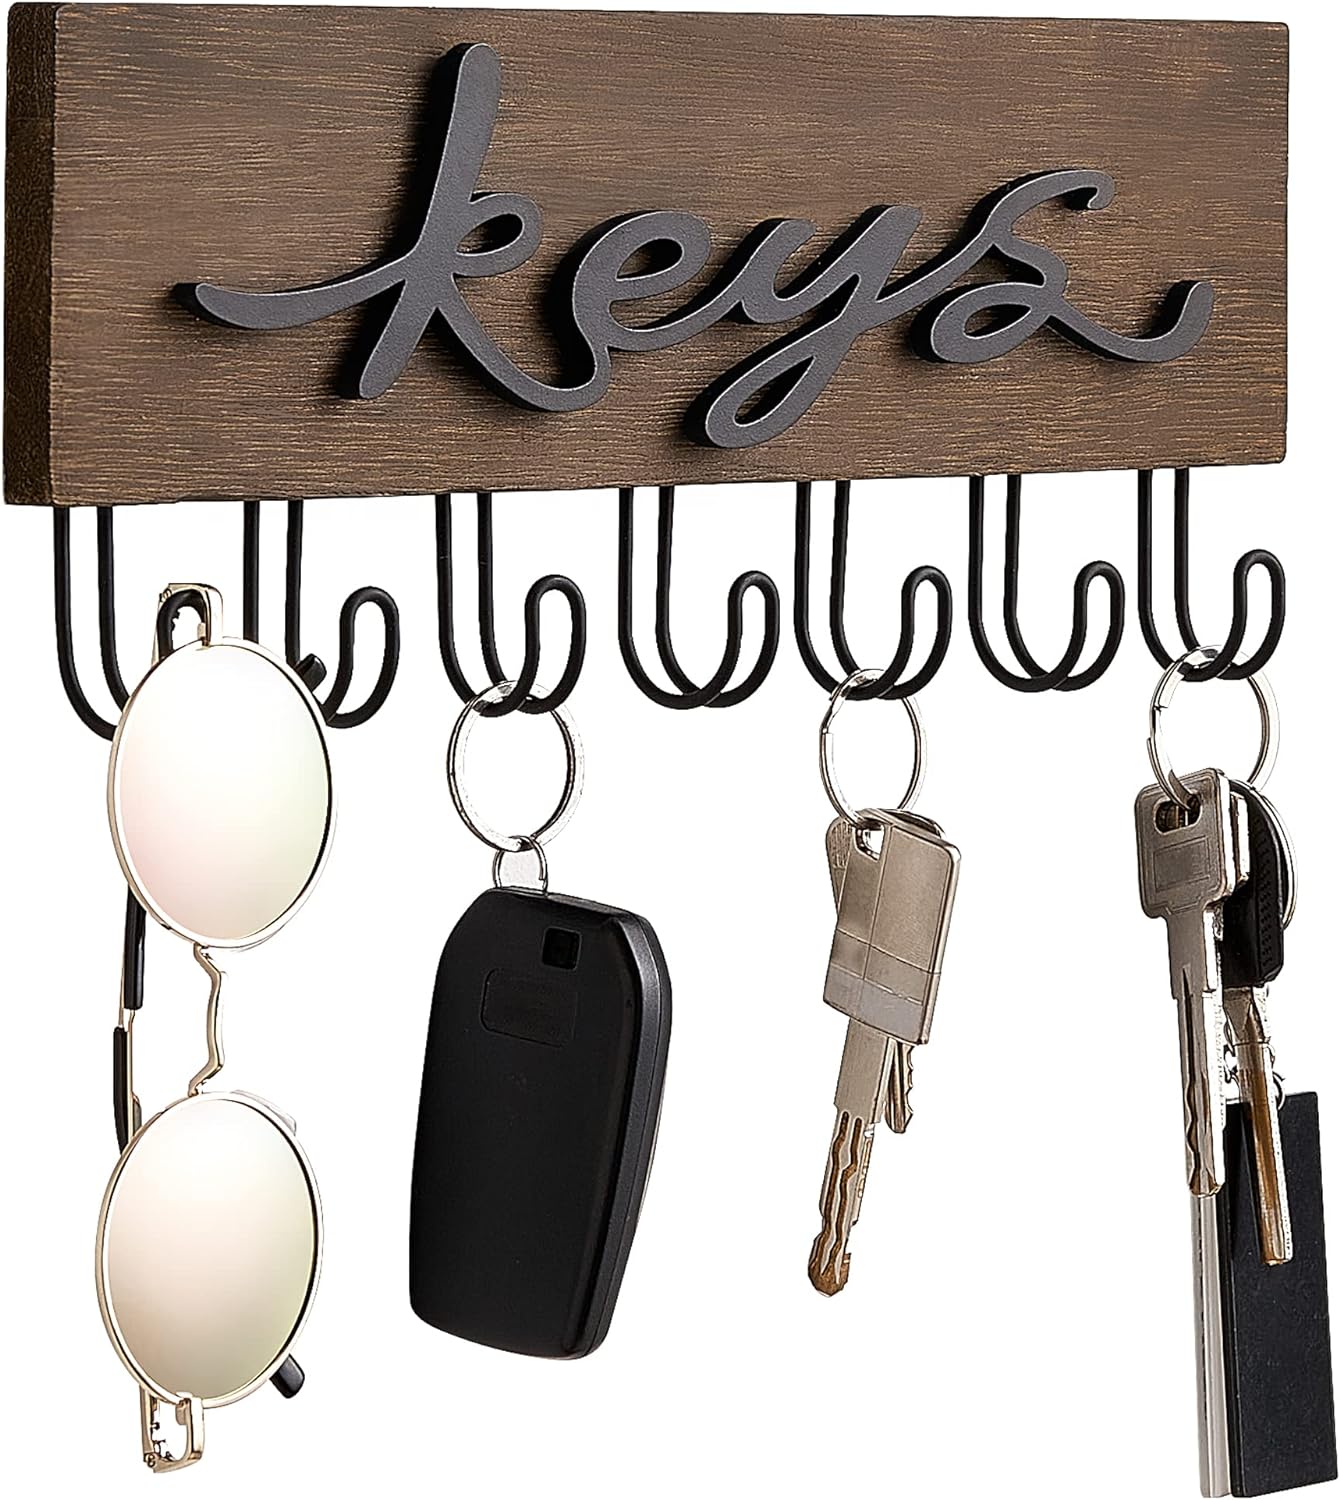 Mkono Key Holder for Wall Decorative with 7 Hooks, Wall Mounted Keys Hanger Organizer Rustic Wood Hanging Key Hooks Home Decor Farmhouse Key Rack for Entryway, Hallway, Office